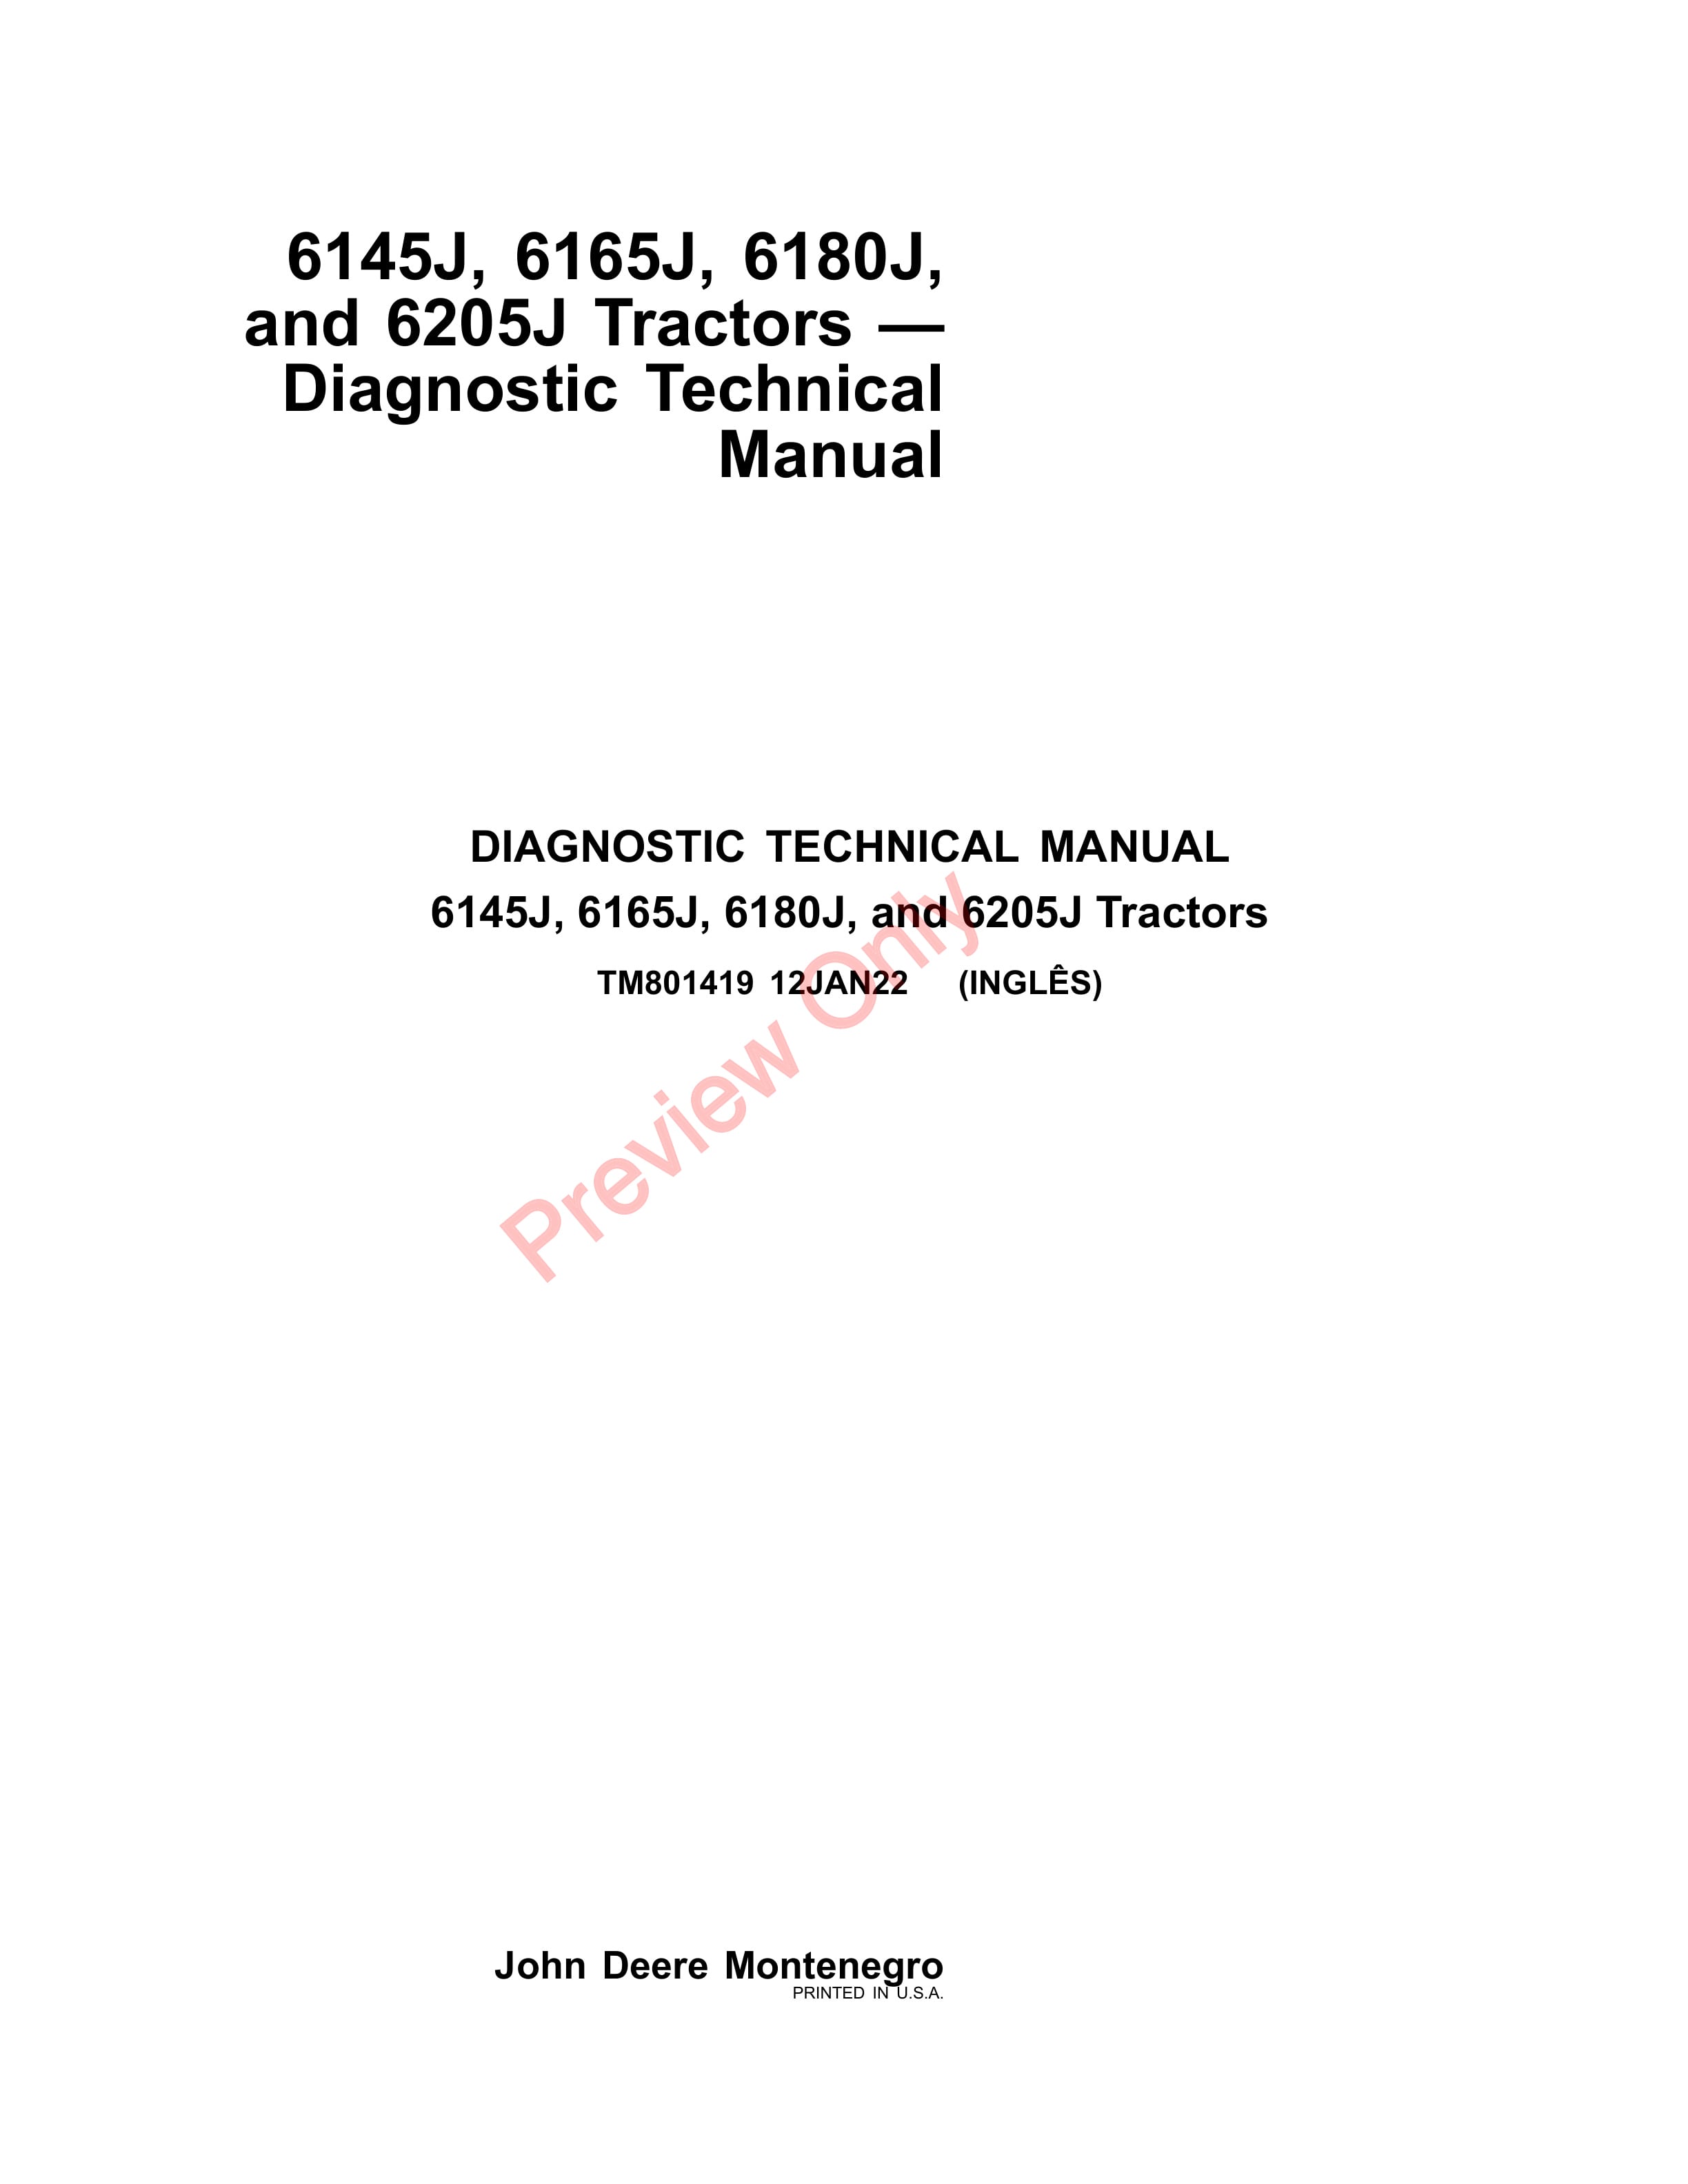 John Deere 6145J, 6165J, 6180J, and 6205J Tractors Diagnostic Technical Manual TM801419 12JAN22-1